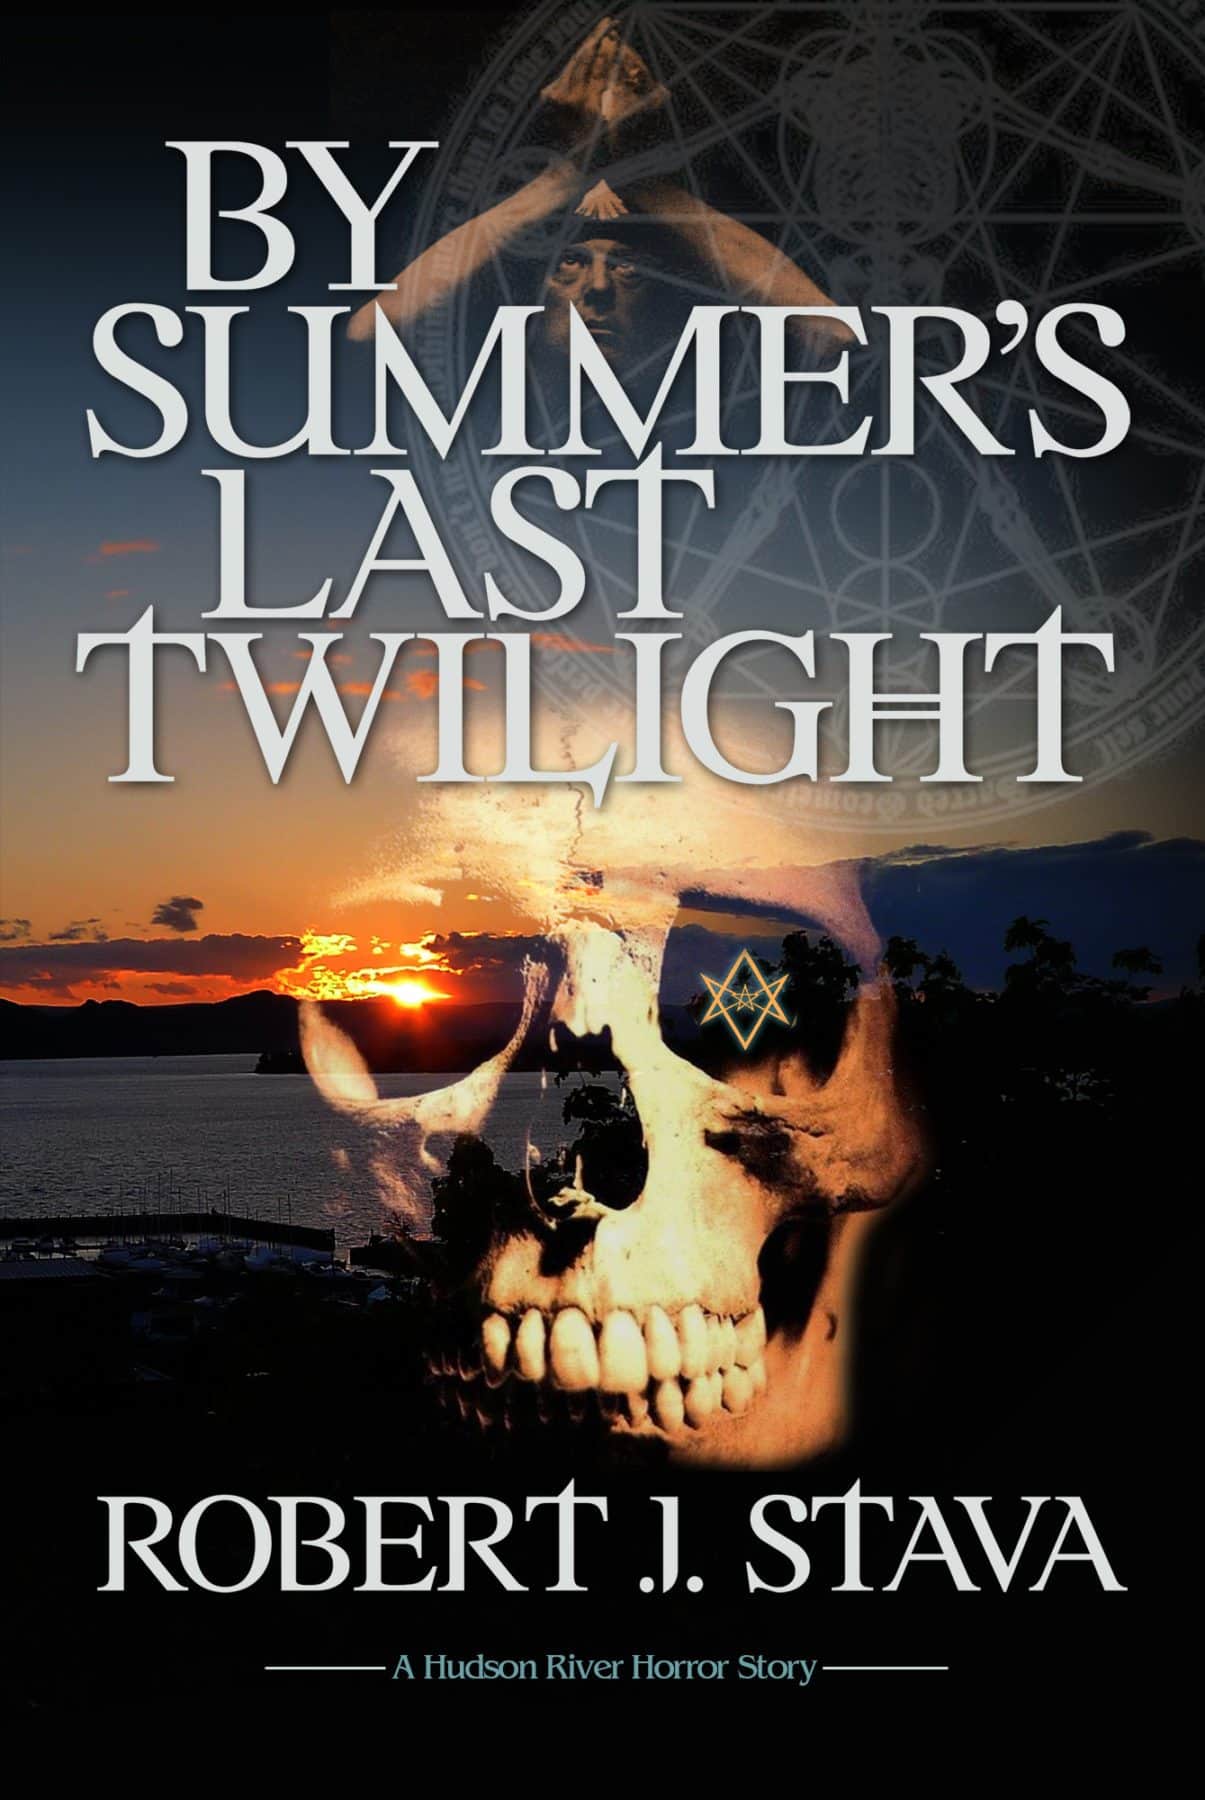 Horror Book Review: By Summer’s Last Twilight (Robert J. Stava)